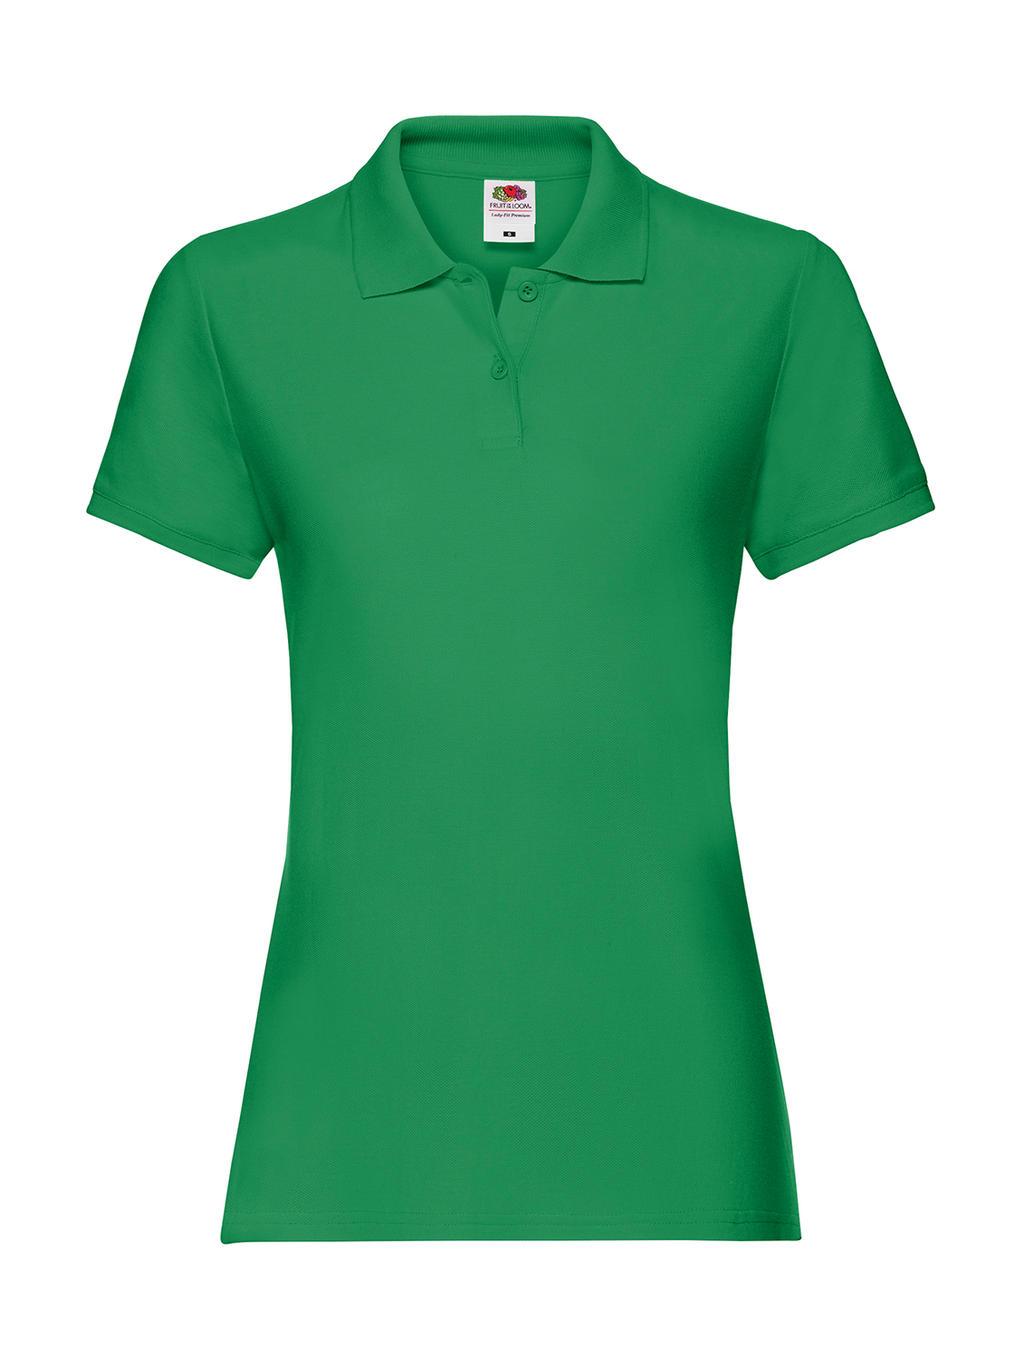  Ladies Premium Polo in Farbe Kelly Green